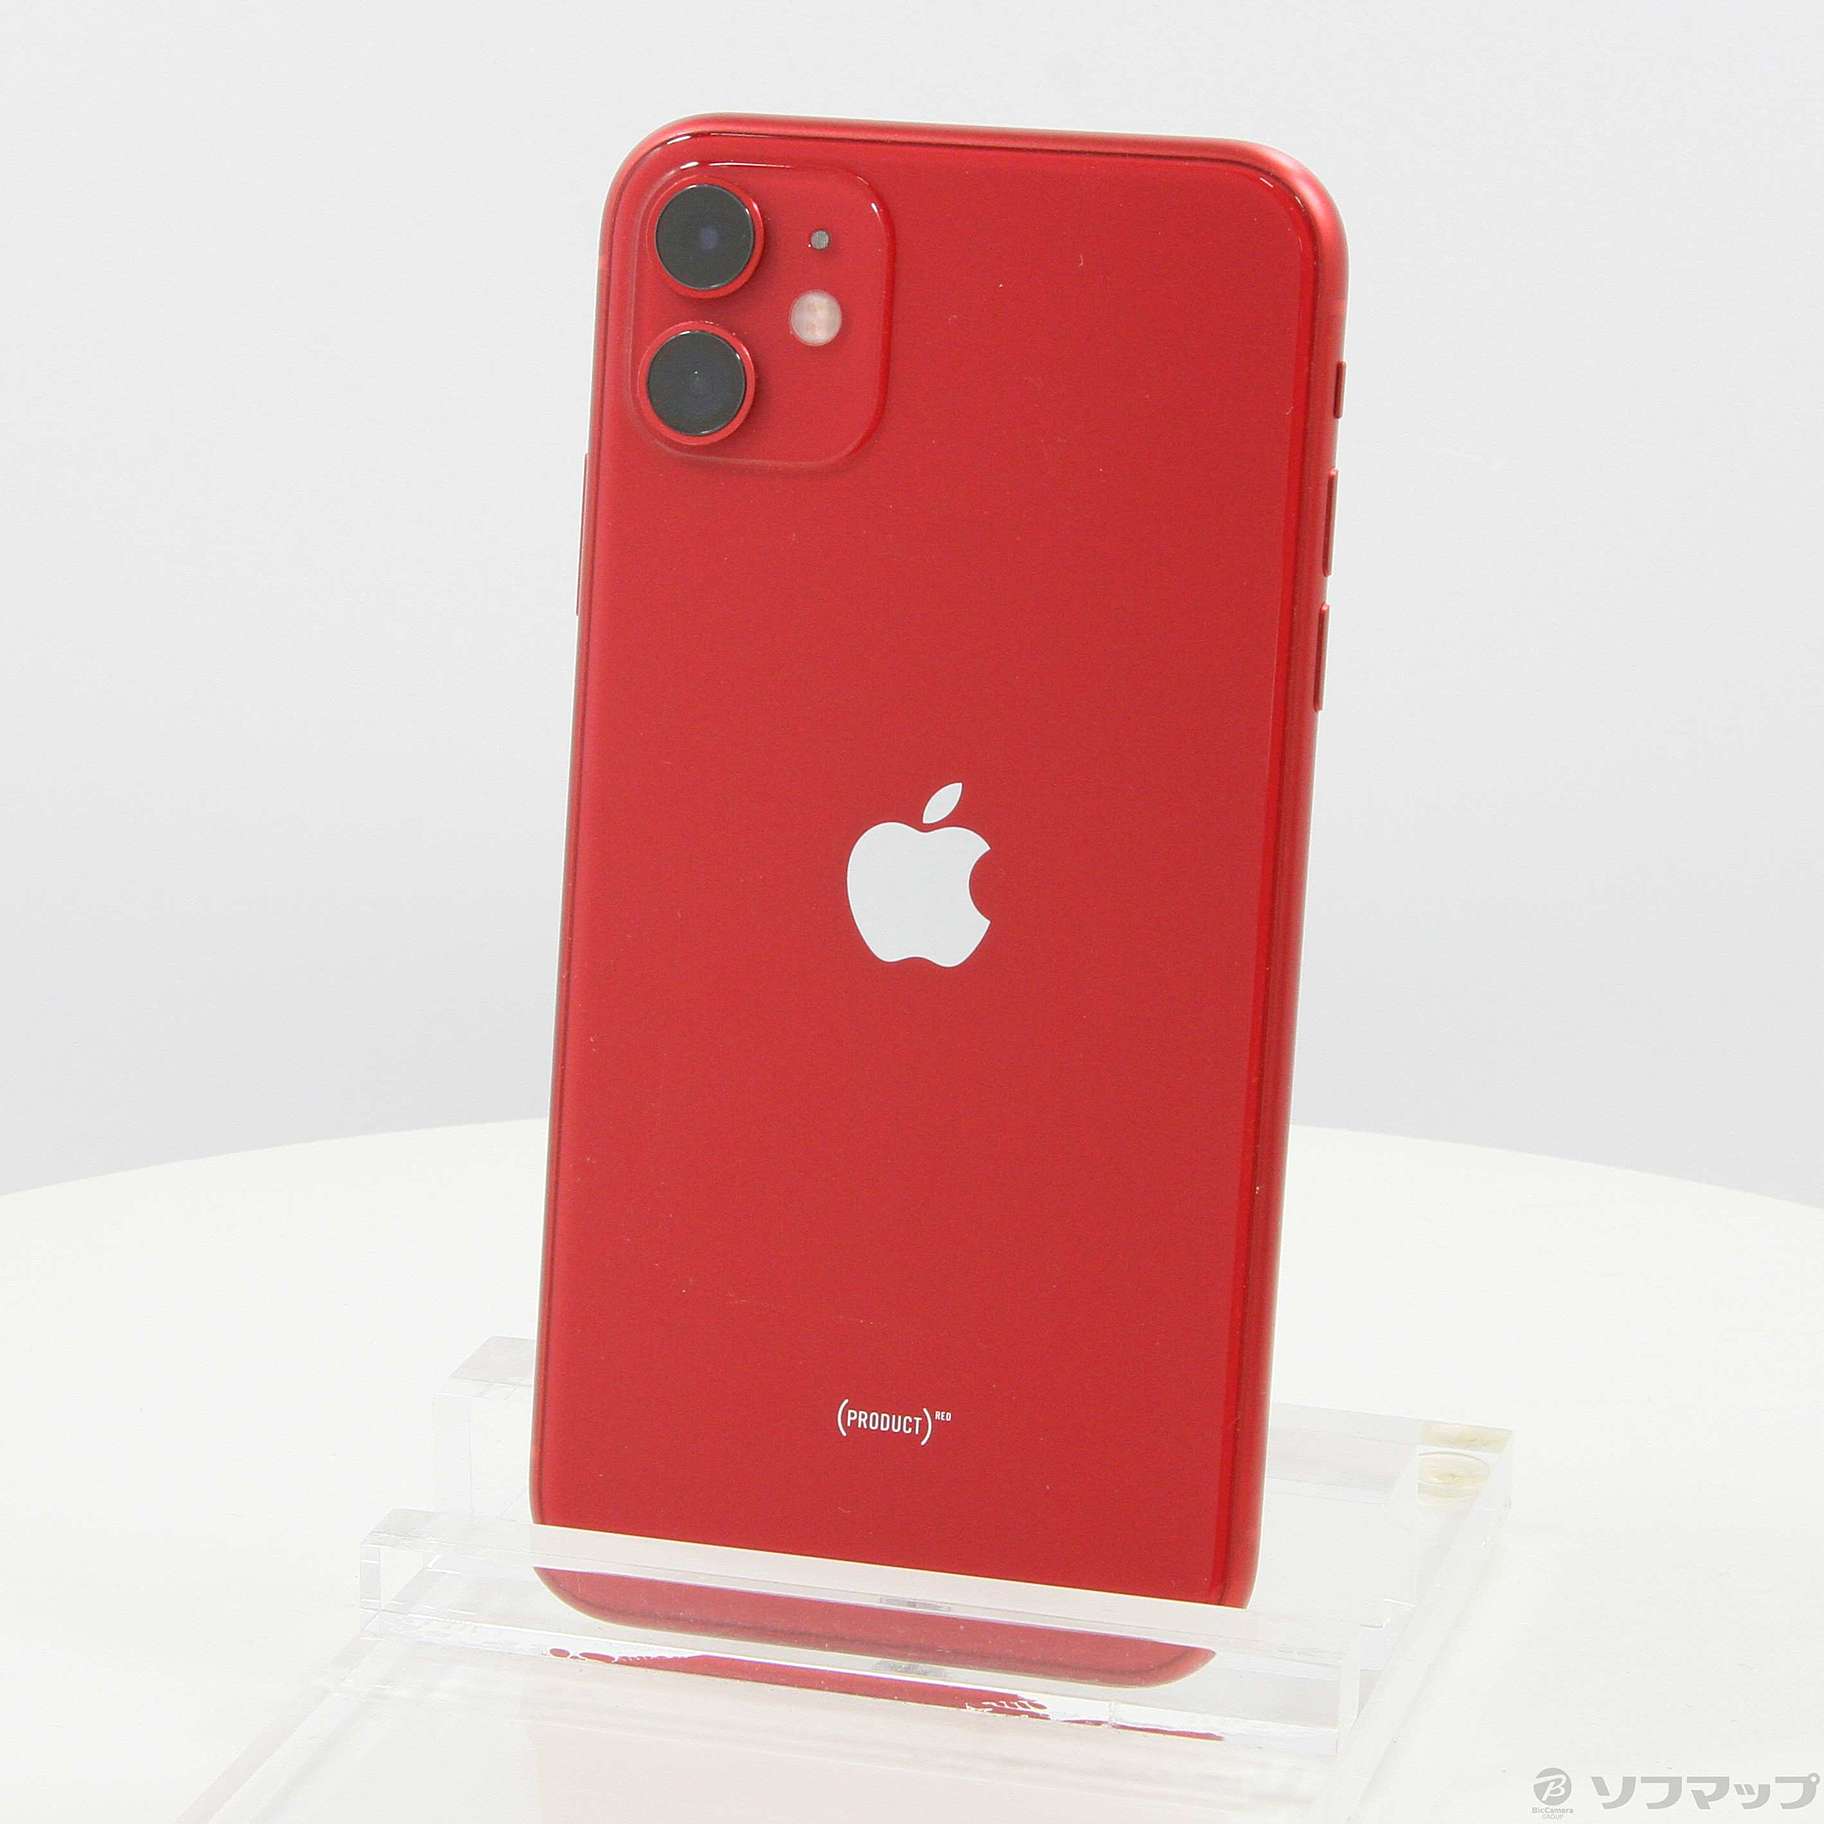 iPhone 11 RED 128 GB SIMフリー